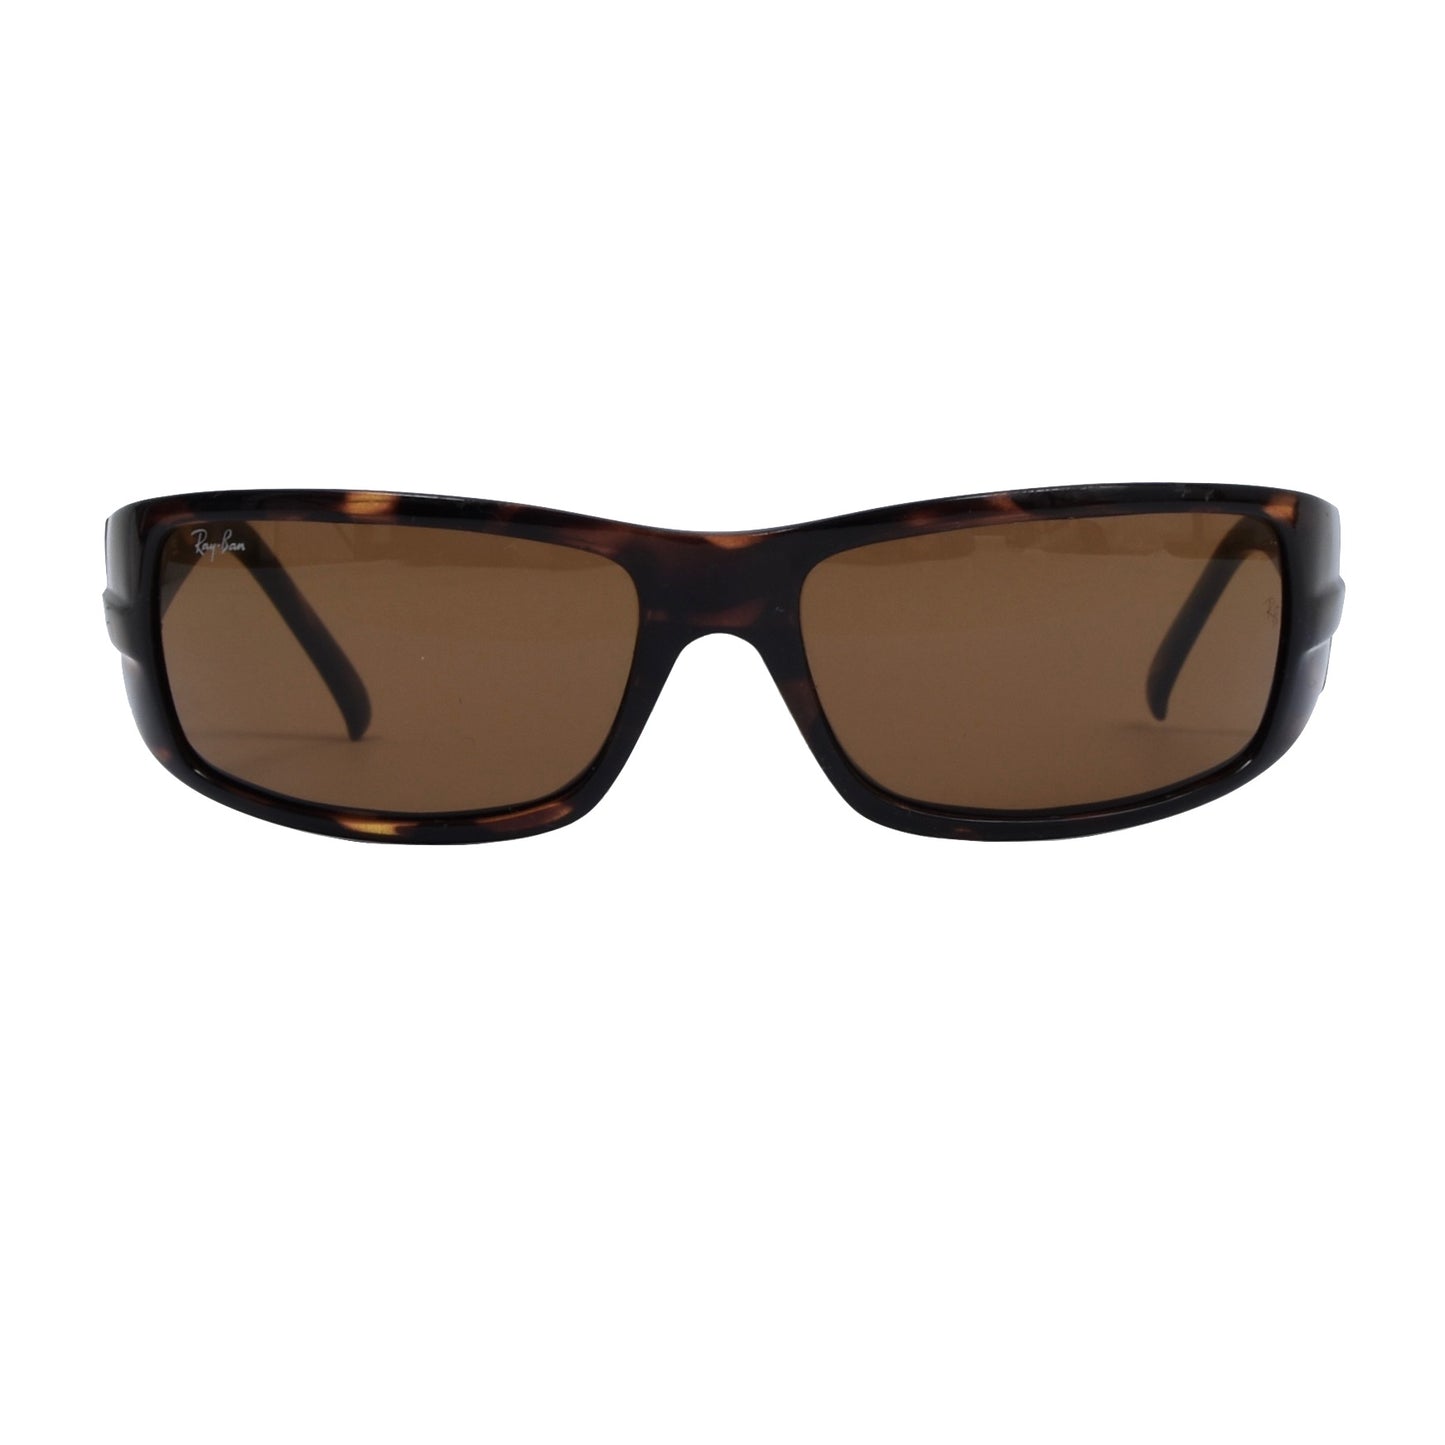 Ray-Ban RB 4057 Sunglasses - Tortoise